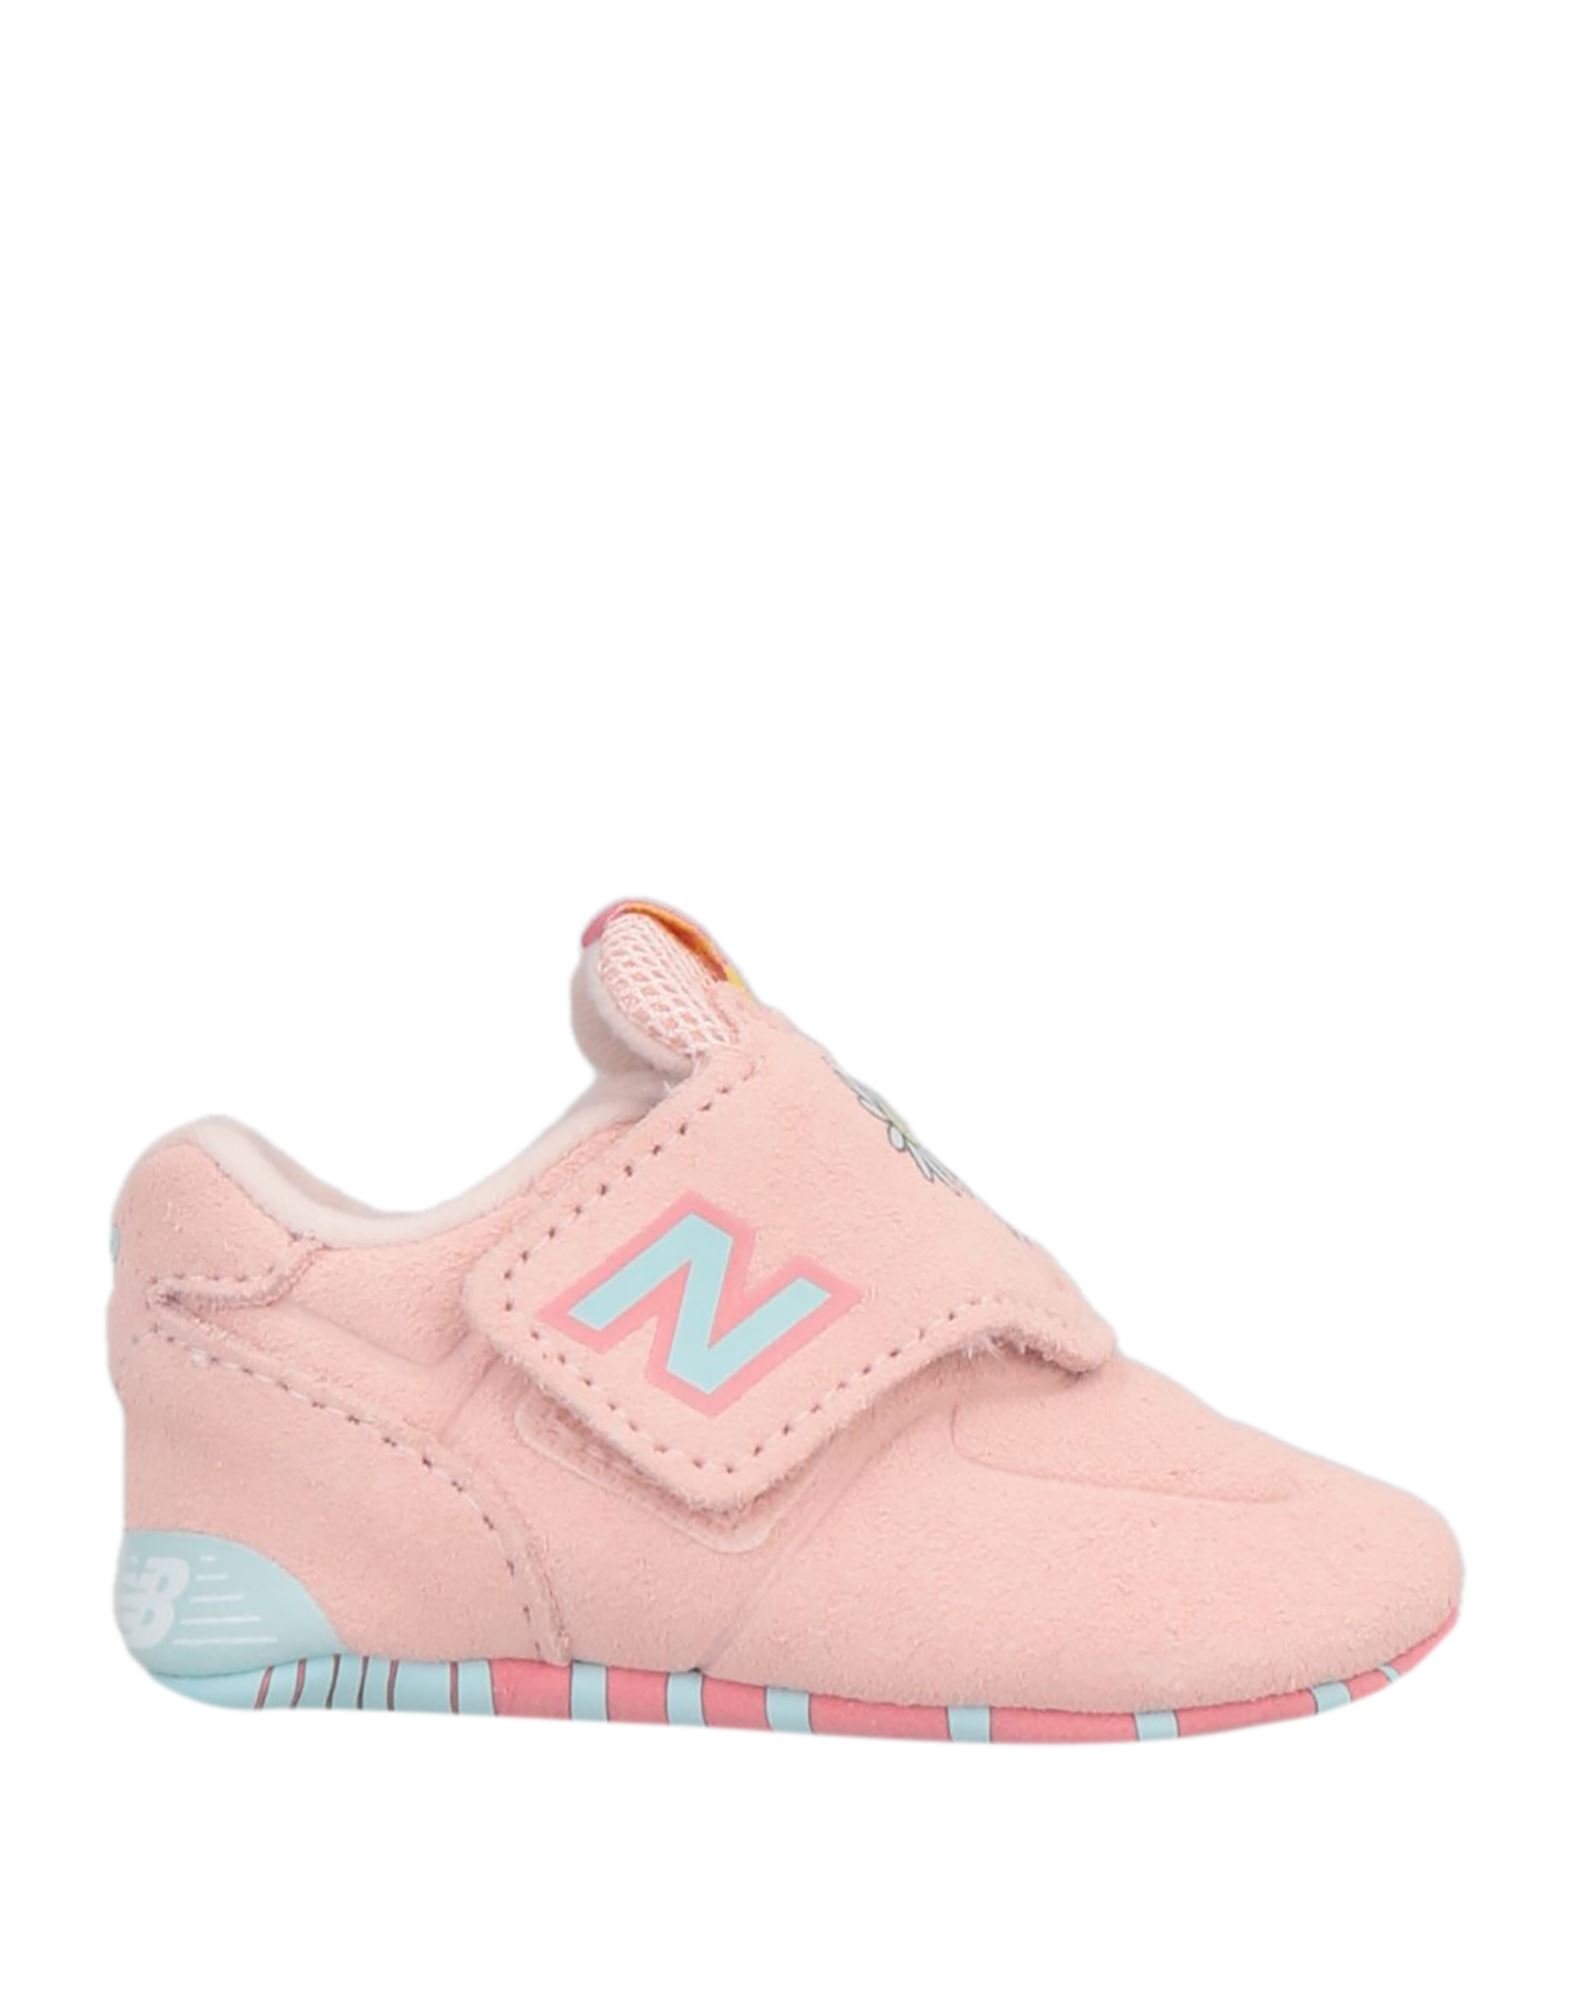 New Balance Kids' Newborn Shoes In Pink